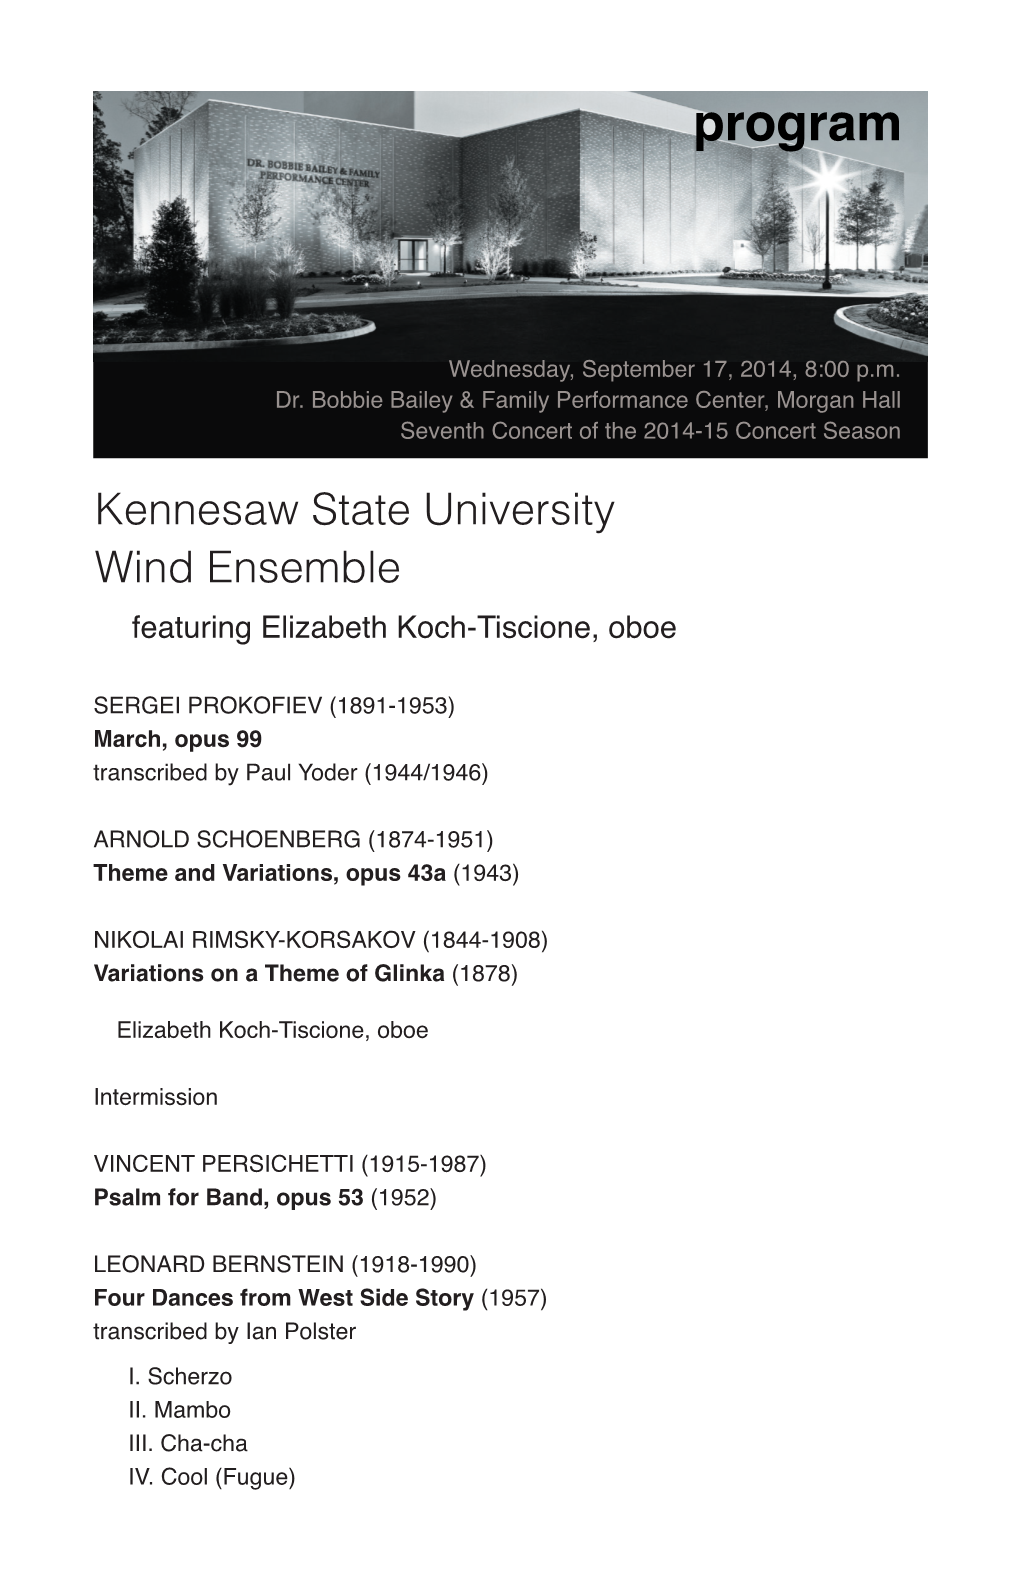 KSU Wind Ensemble Featuring Elizabeth Koch-Tiscione, Oboe